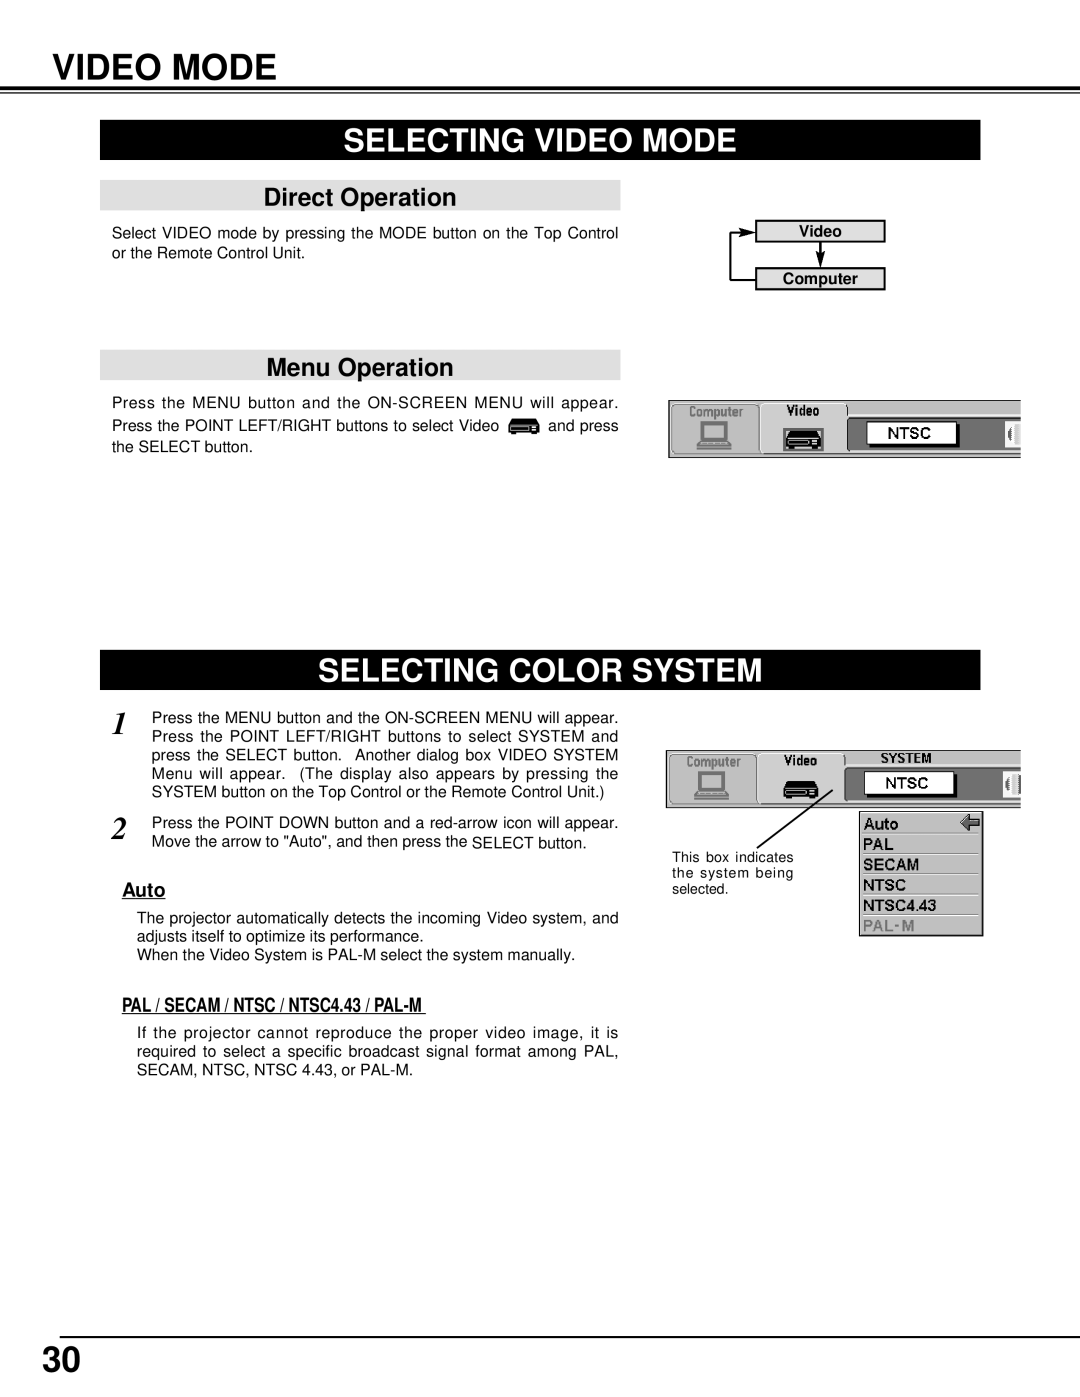 BOXLIGHT CP-14t manual Selecting Video Mode, Selecting Color System, Auto, PAL / SECAM / NTSC / NTSC4.43 / PAL-M 